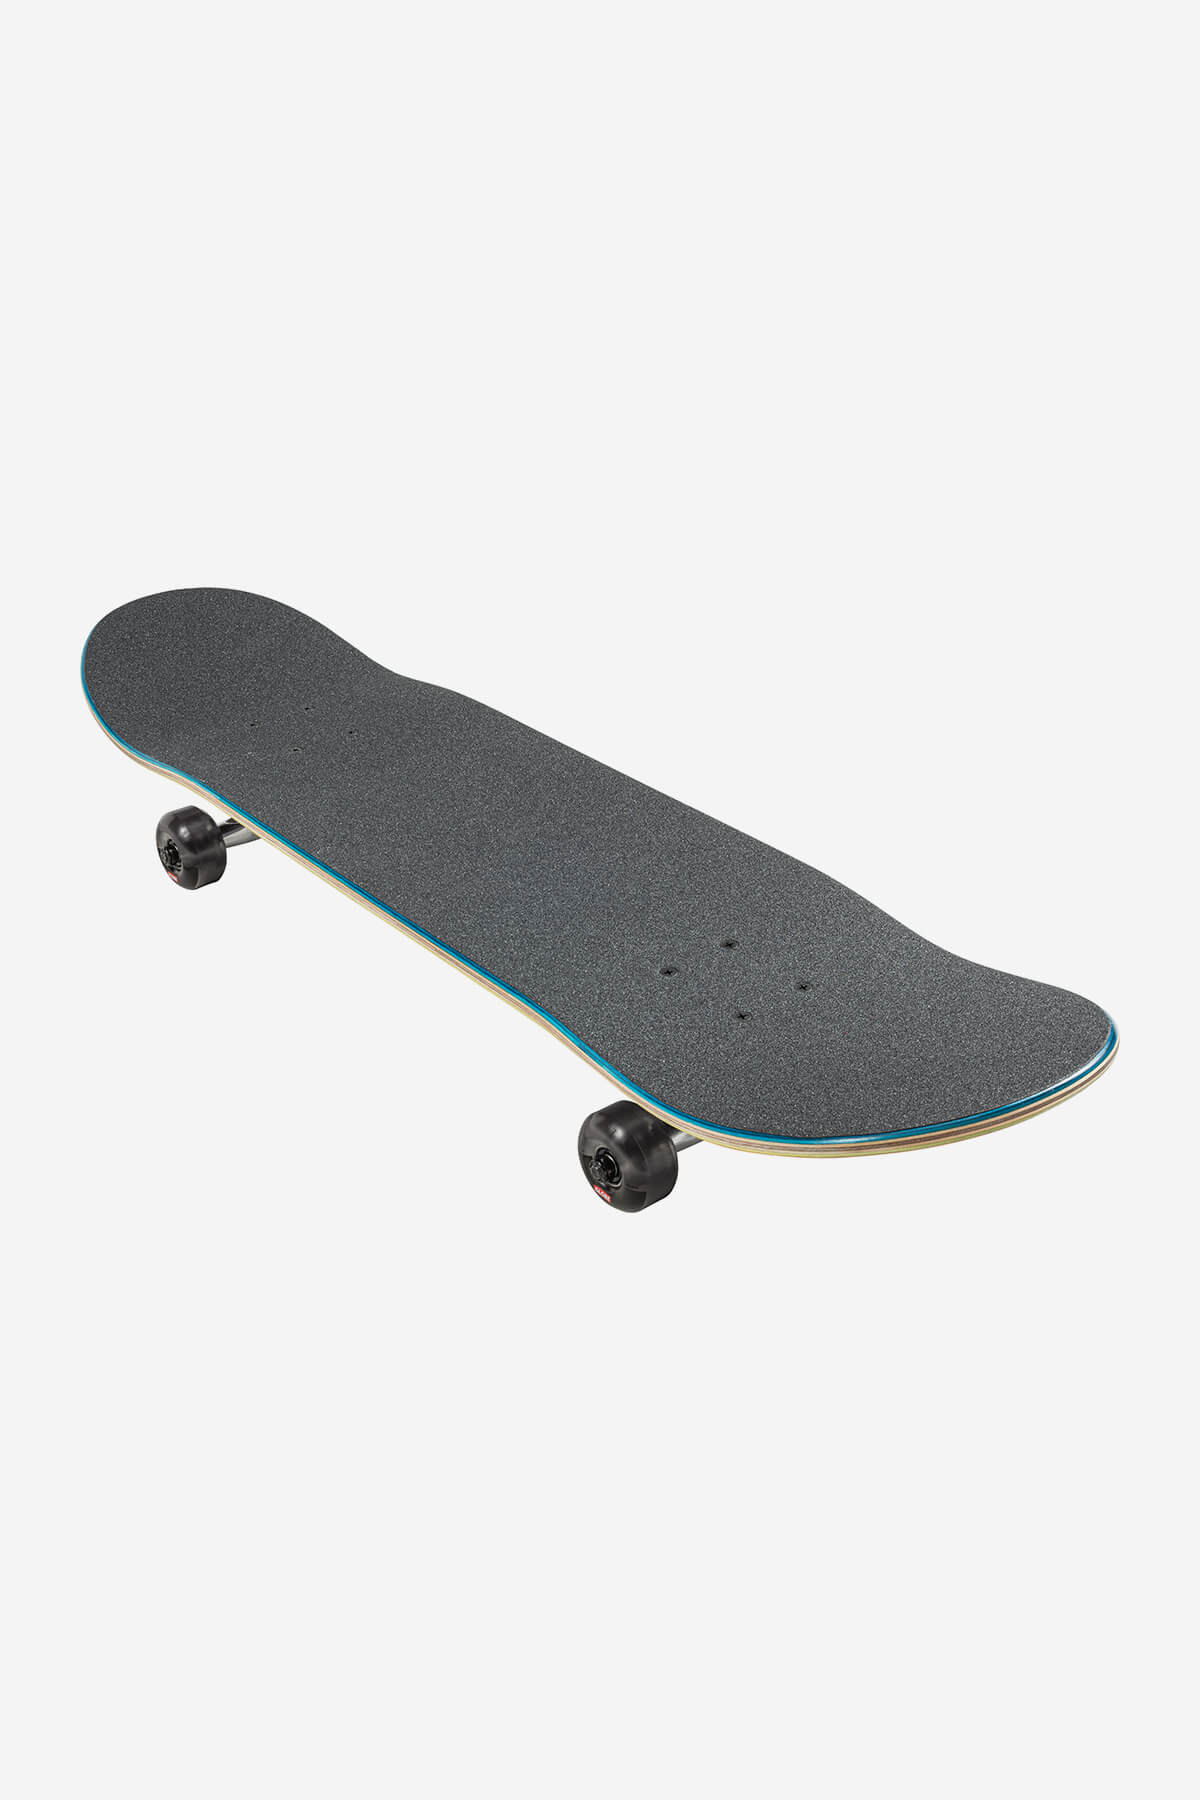 g1 ablaze black dye 8.0" complete skateboard